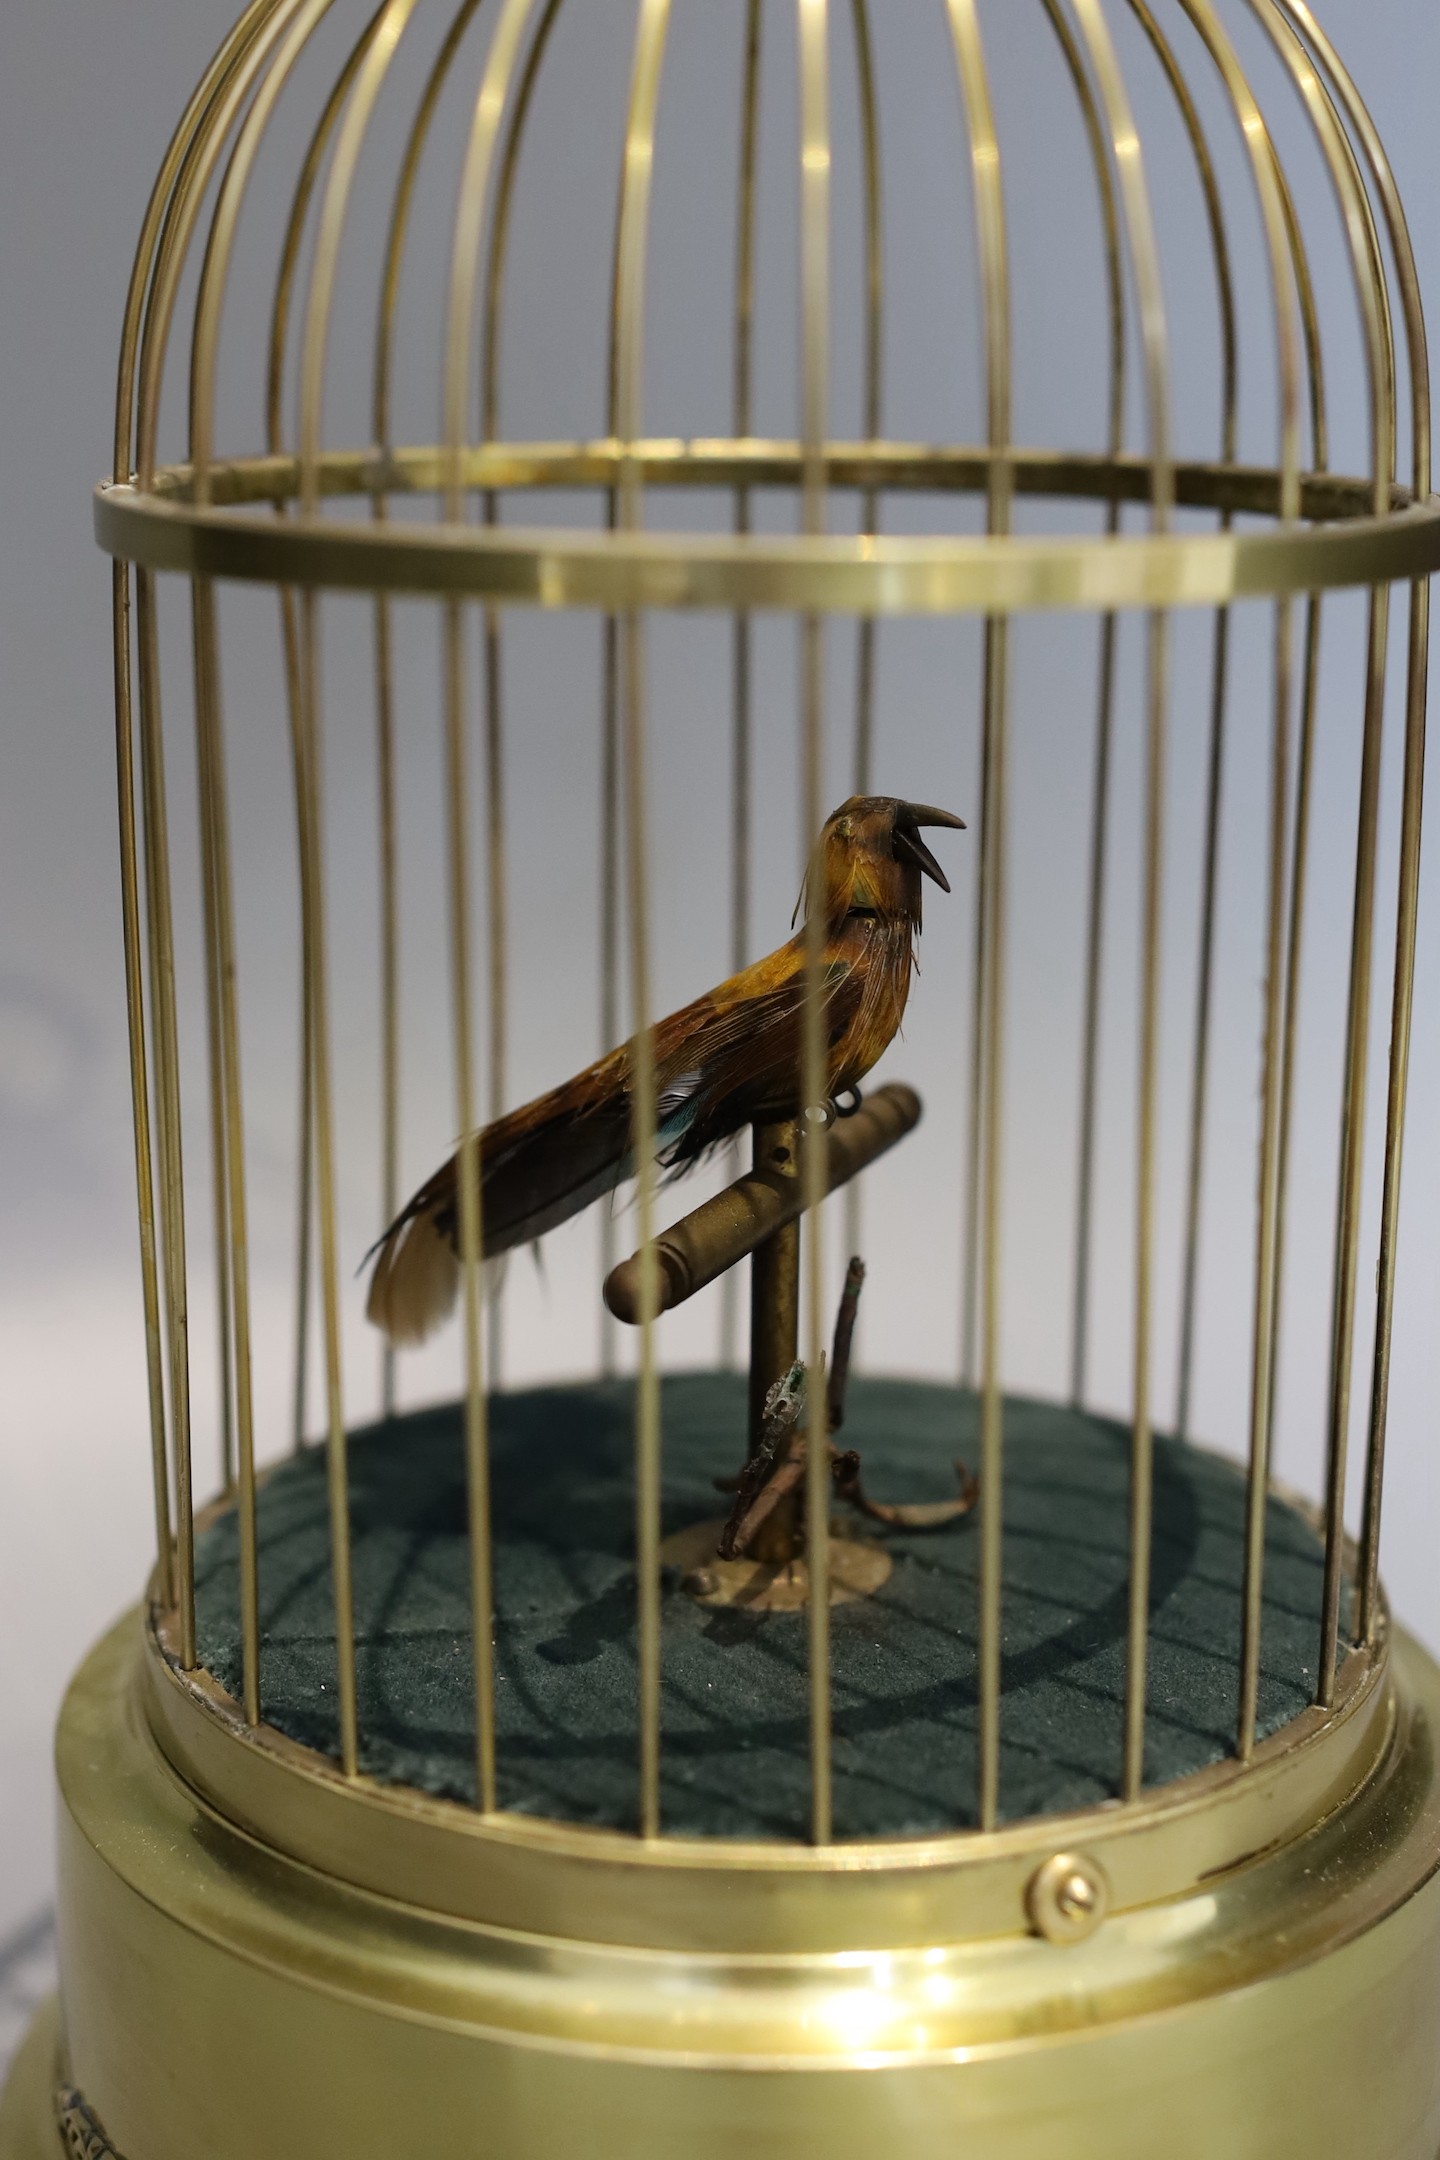 A 20th century German singing bird automaton, height 30cm